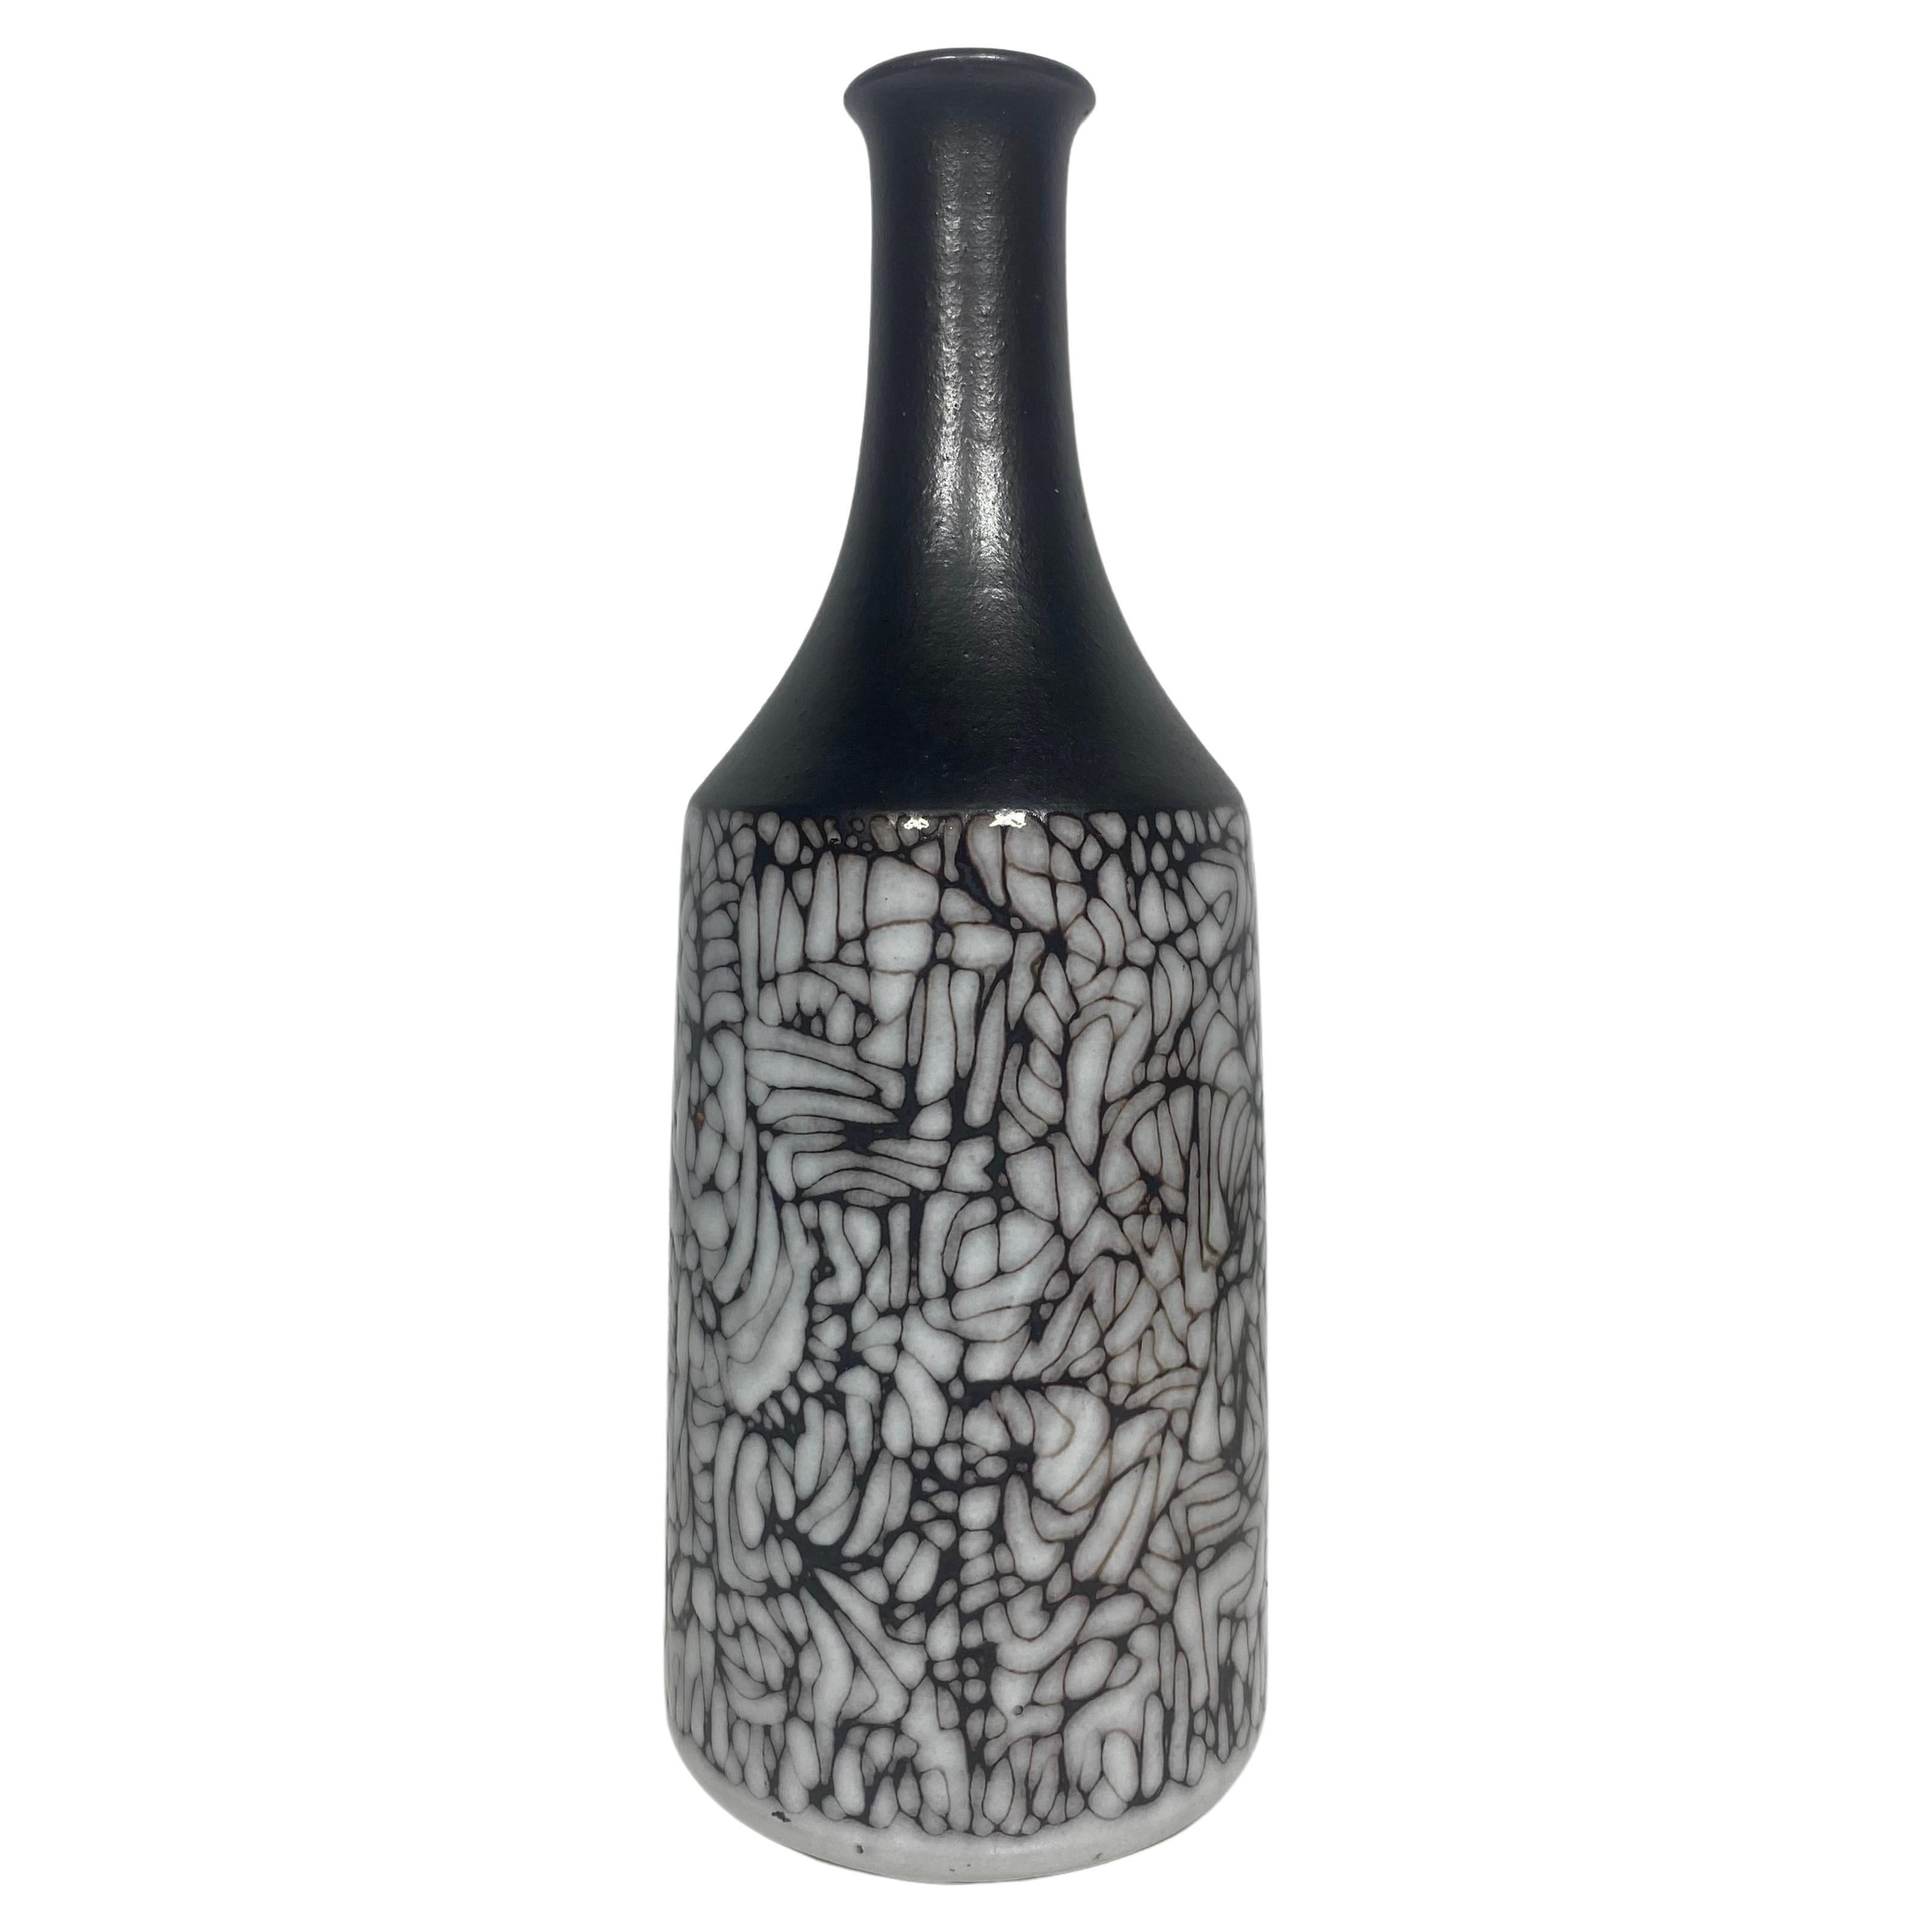  Studio Ceramic Vase from G. Lang for Wilhelm & Elly Kuch, 1960s, Germany